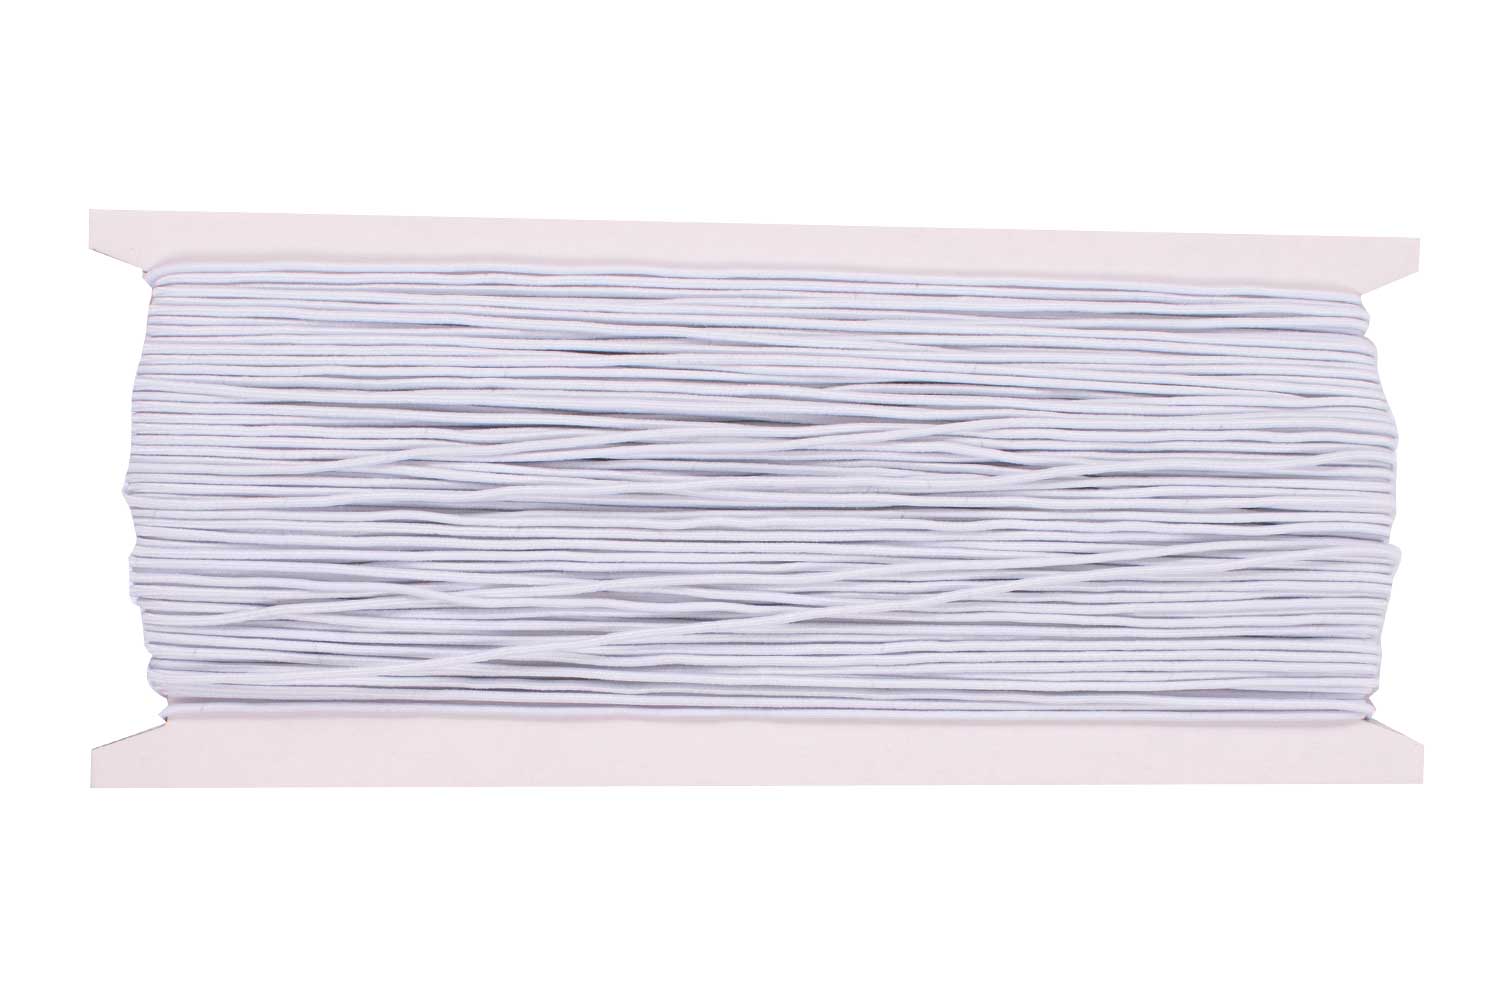 Fil nylon transparent Ø 1mm blanc 5 m